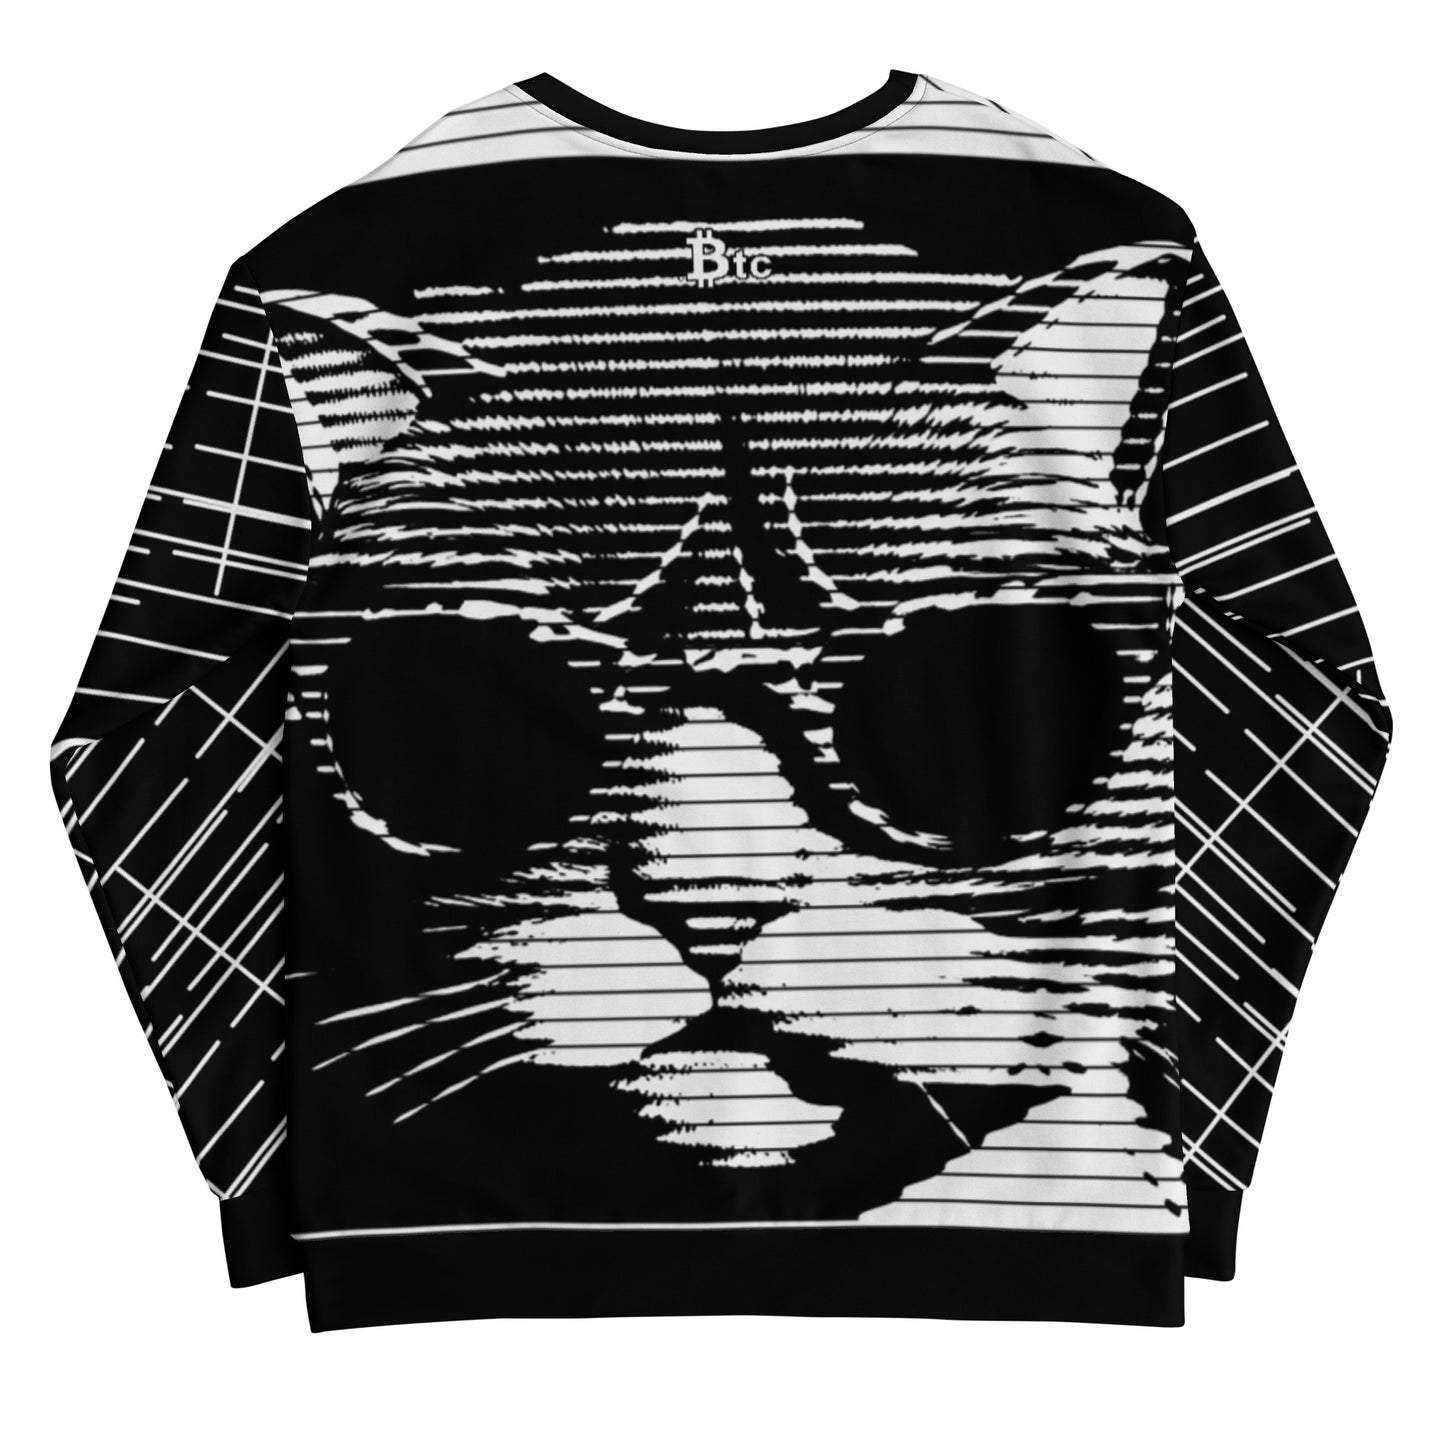 Bitcoin Bw Cat Sweatshirt